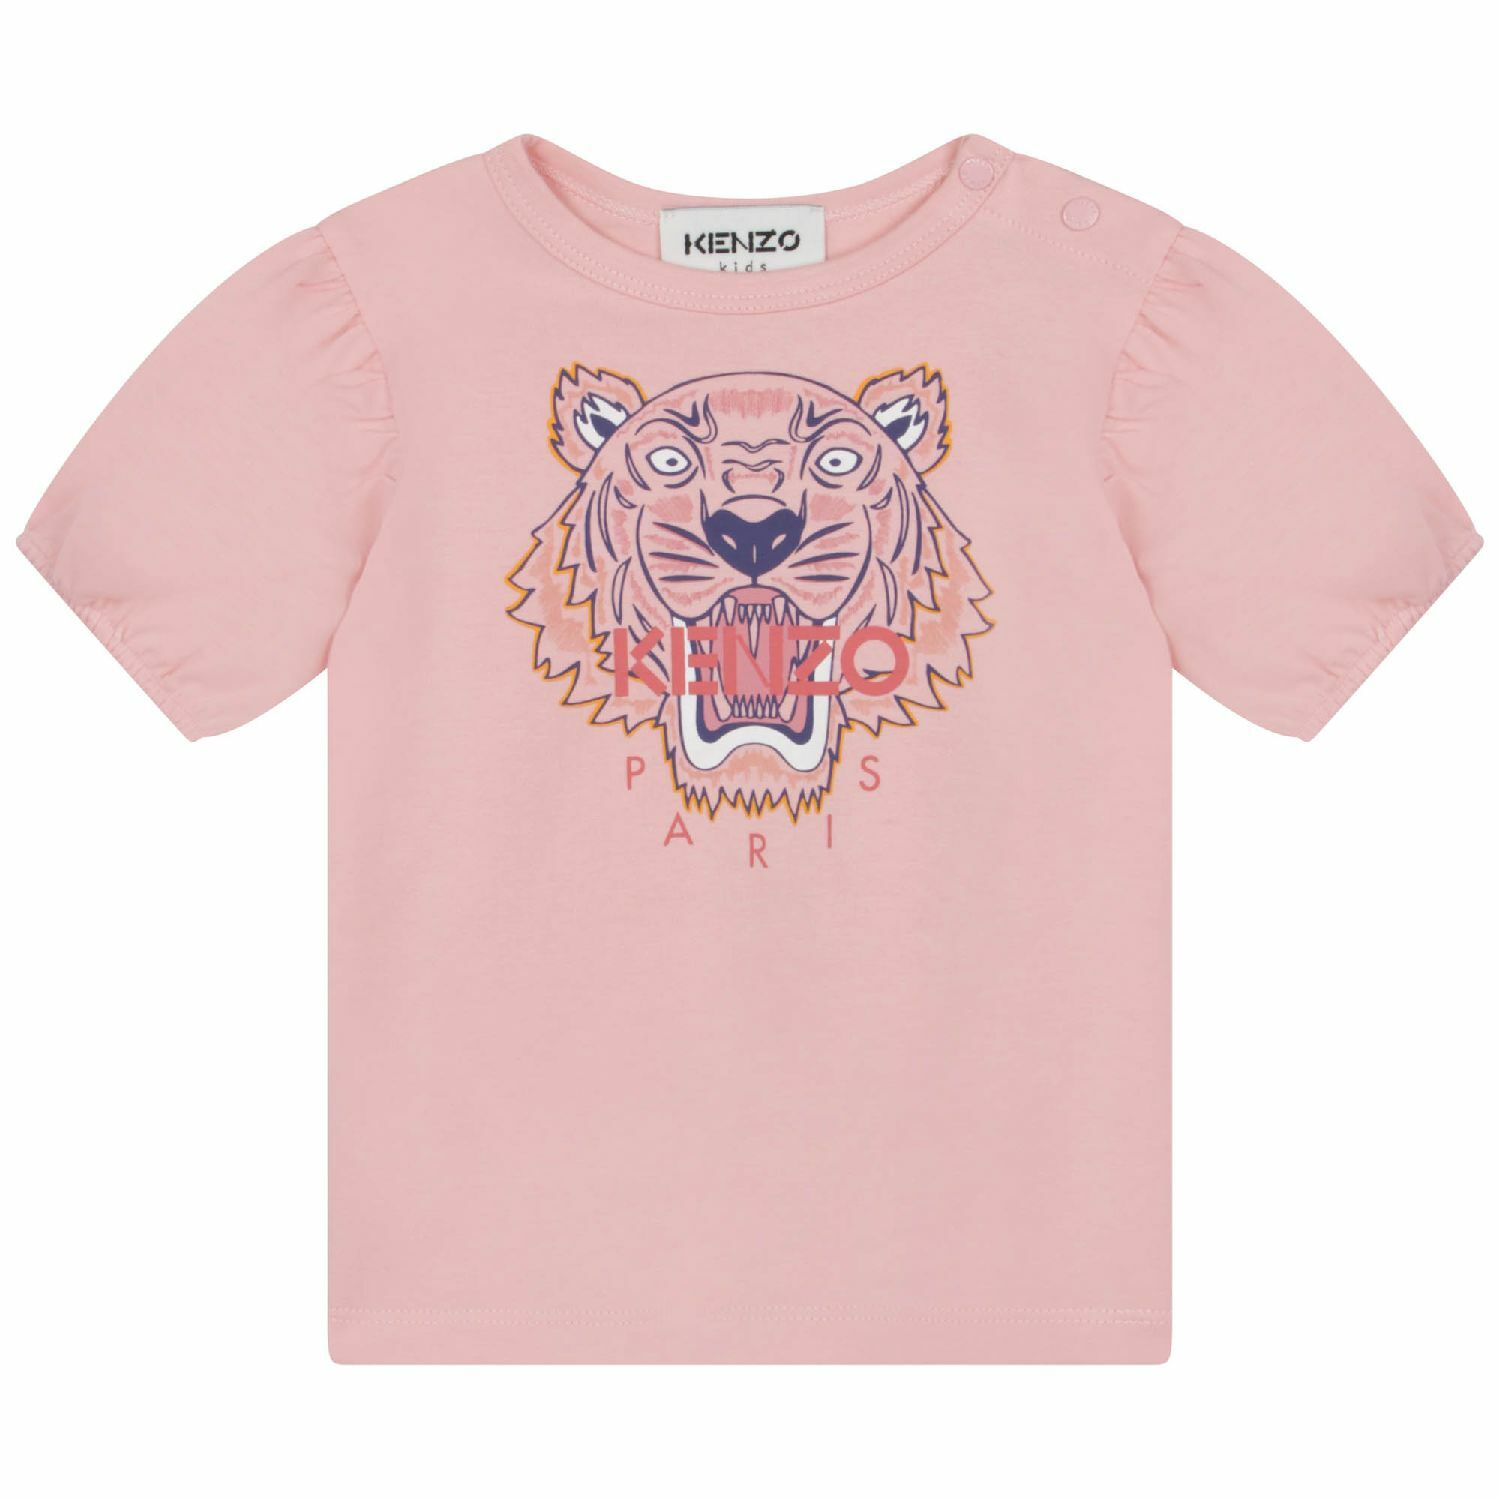 Glimlach Verspilling reguleren Kenzo - Tshirt Tiger - pink online kopen bij Prisca Kindermode en  Tienermode. K05450/46G Prisca junior